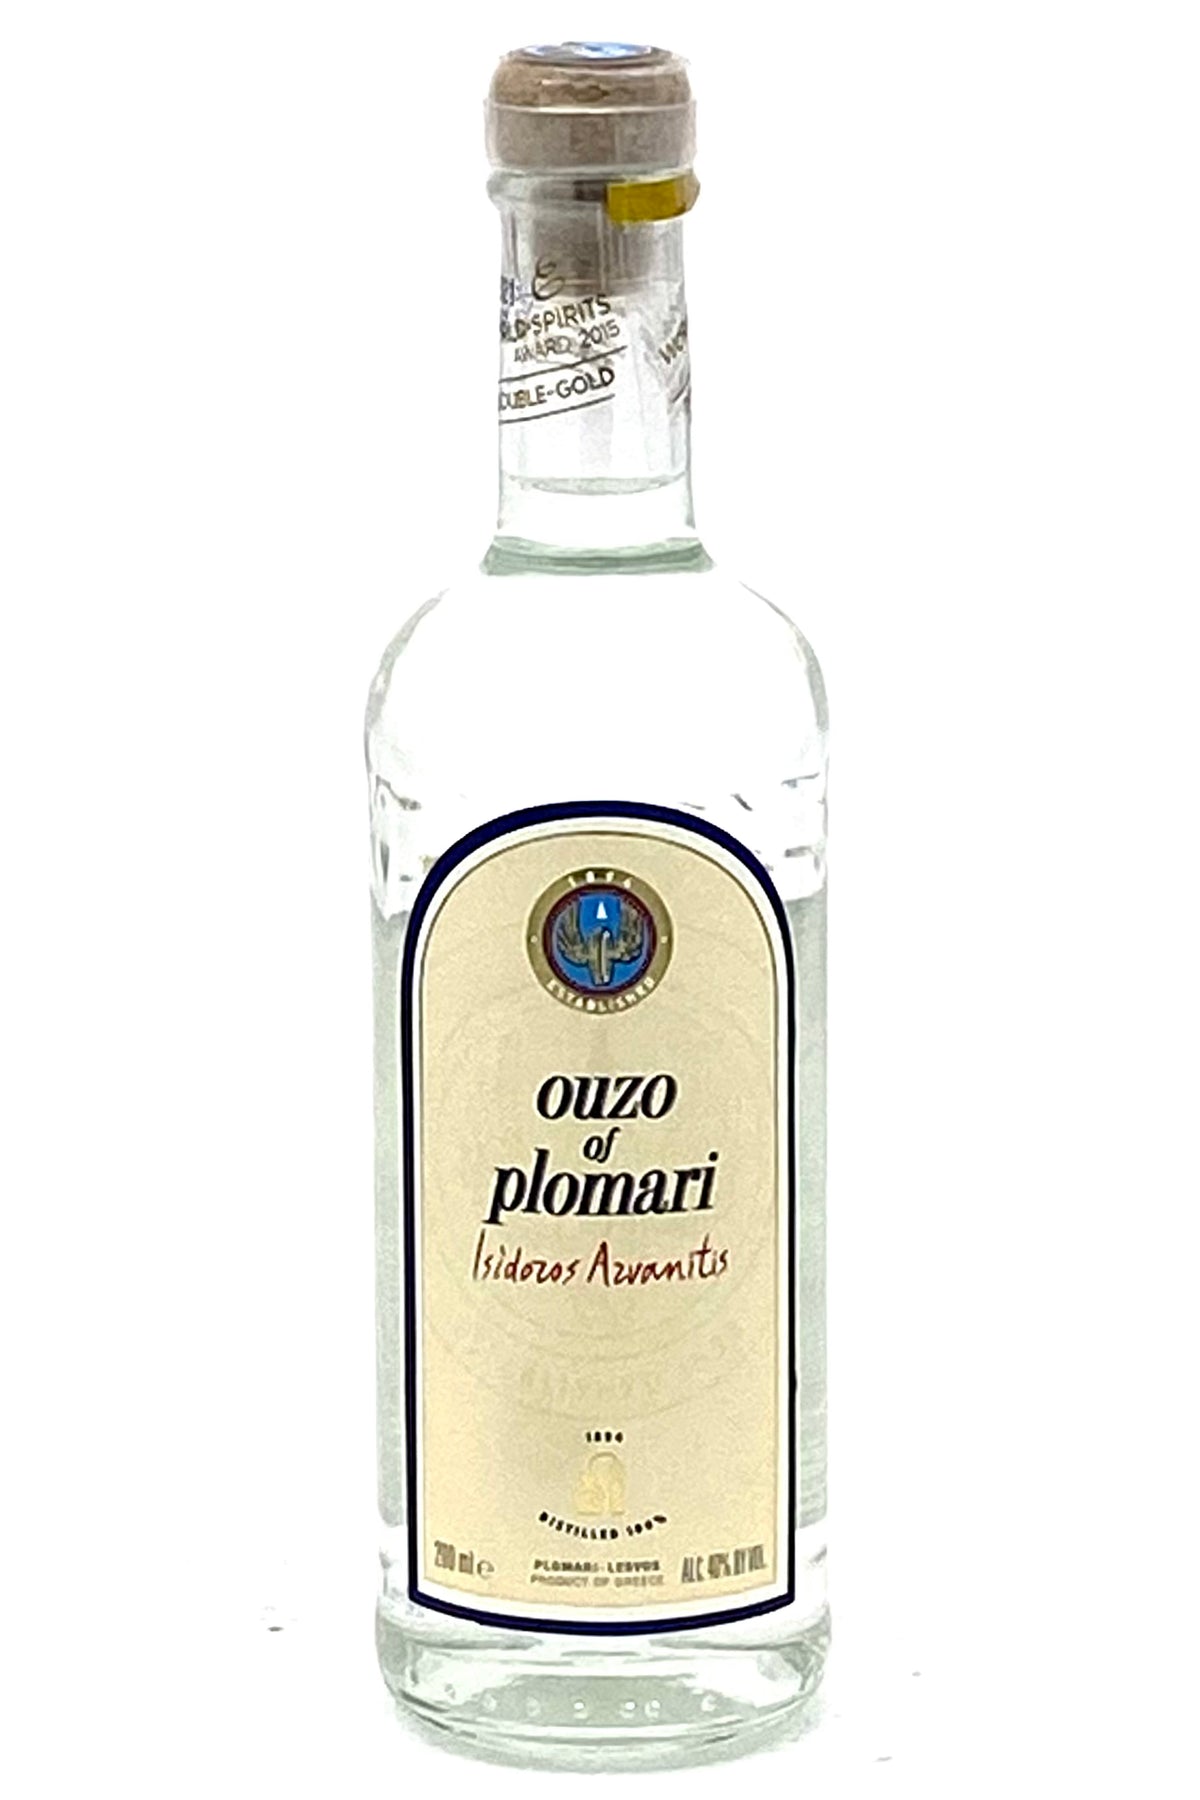 Ouzo of Plomari 1894 Isidoros Arvanitis 200 ml